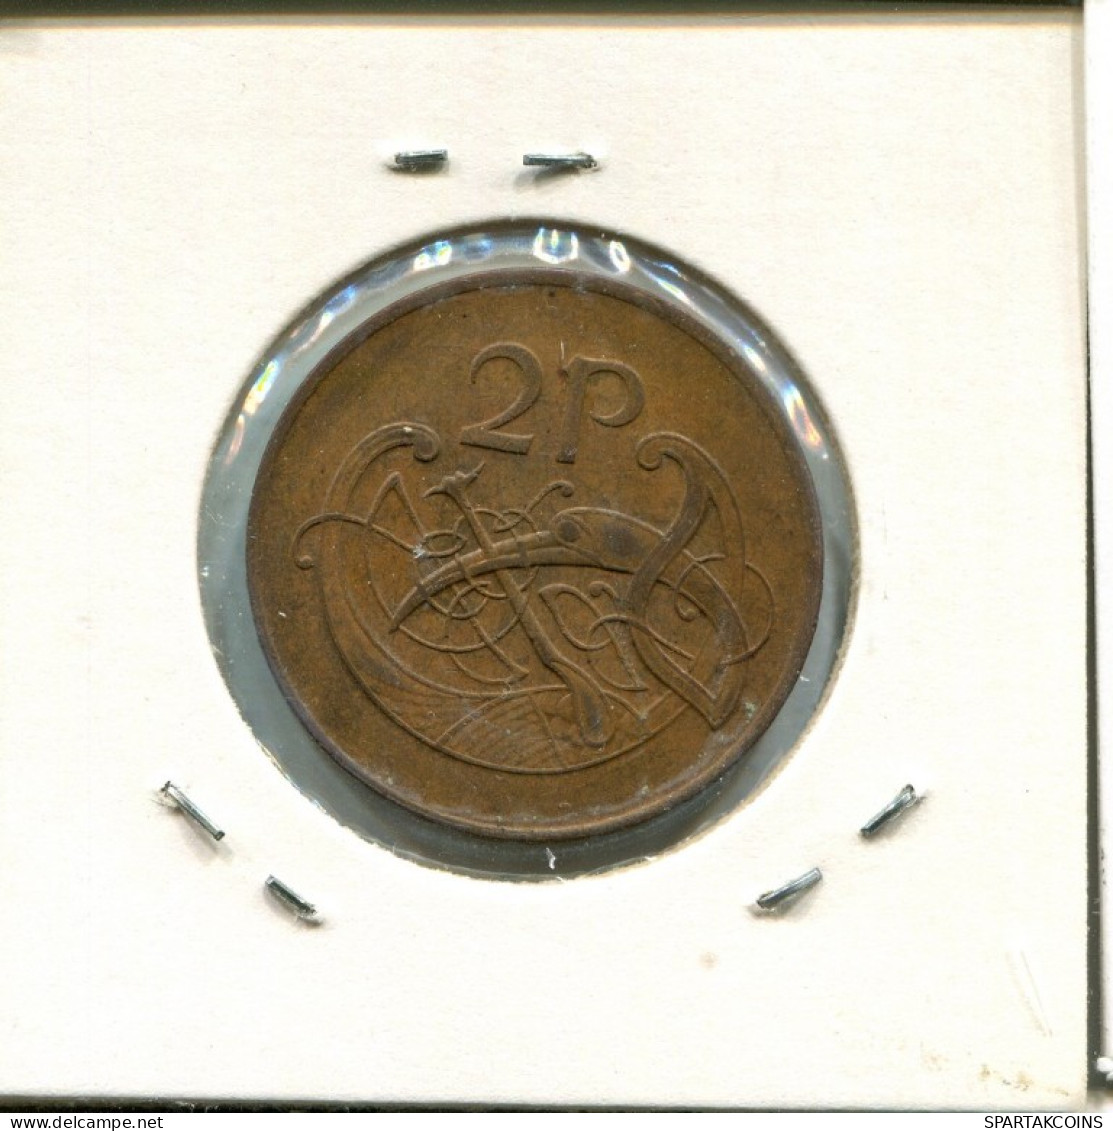 2 PENCE 1980 IRLANDA IRELAND Moneda #AN620.E.A - Ierland